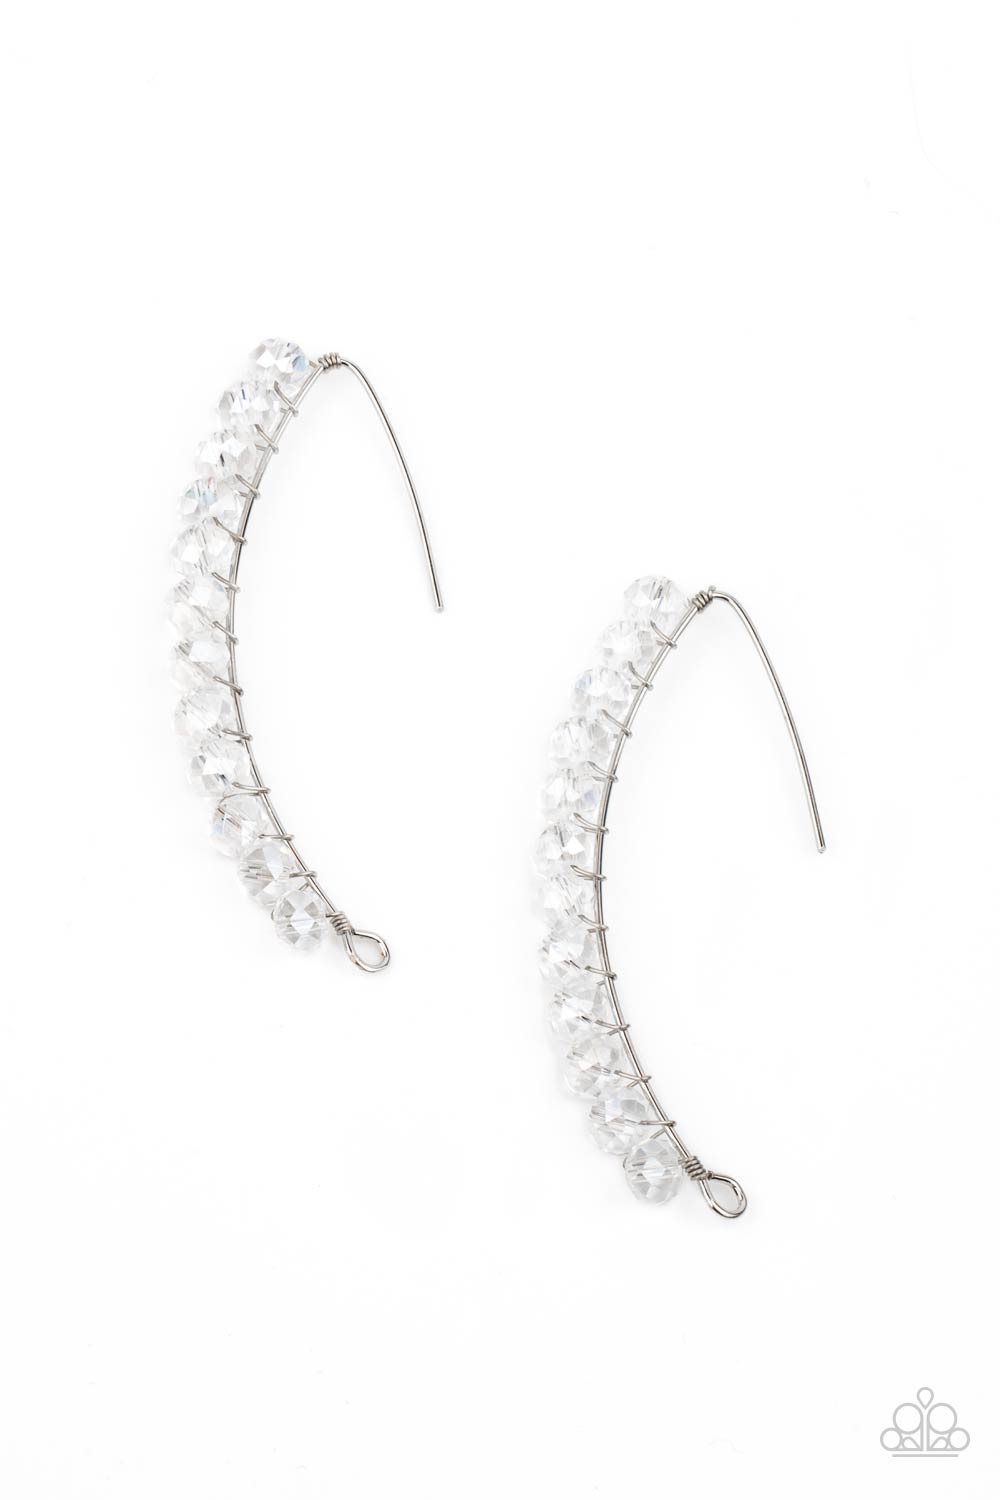 GLOW Hanging Fruit Iridescent White Rhinestone Post Earrings - Paparazzi Accessories- lightbox - CarasShop.com - $5 Jewelry by Cara Jewels